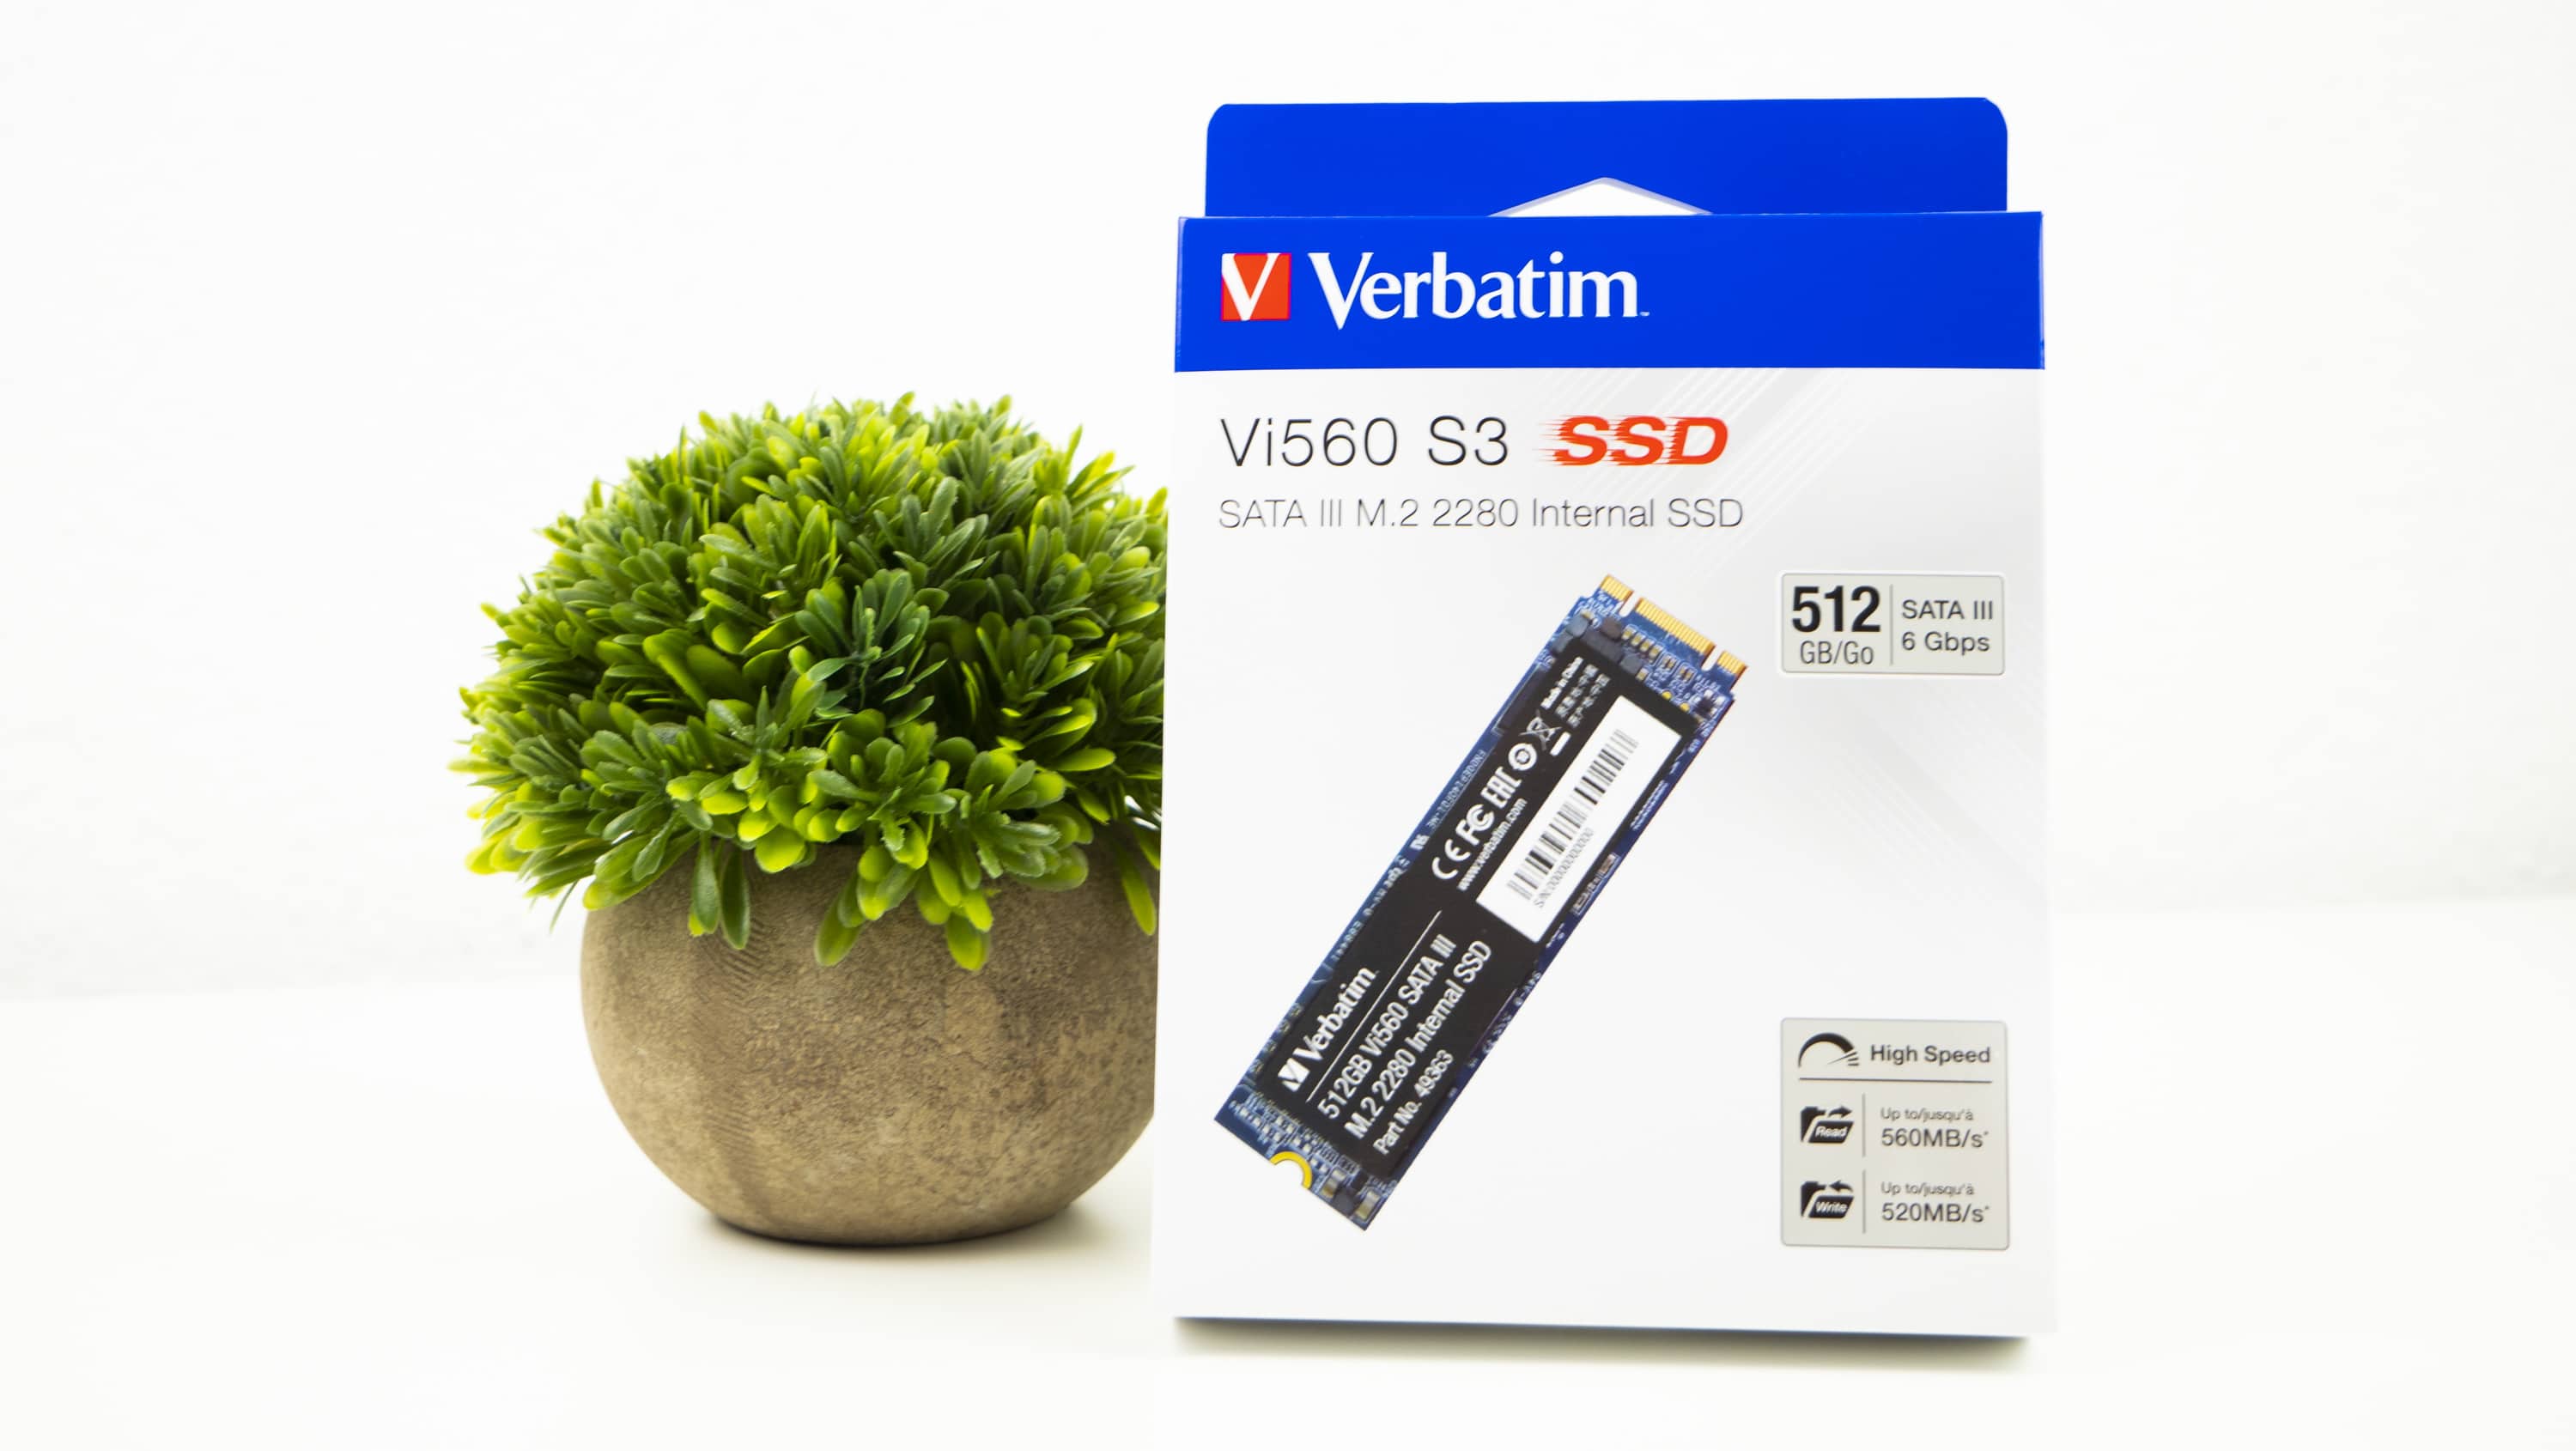 SSD im Test: Vi560 Verbatim S3